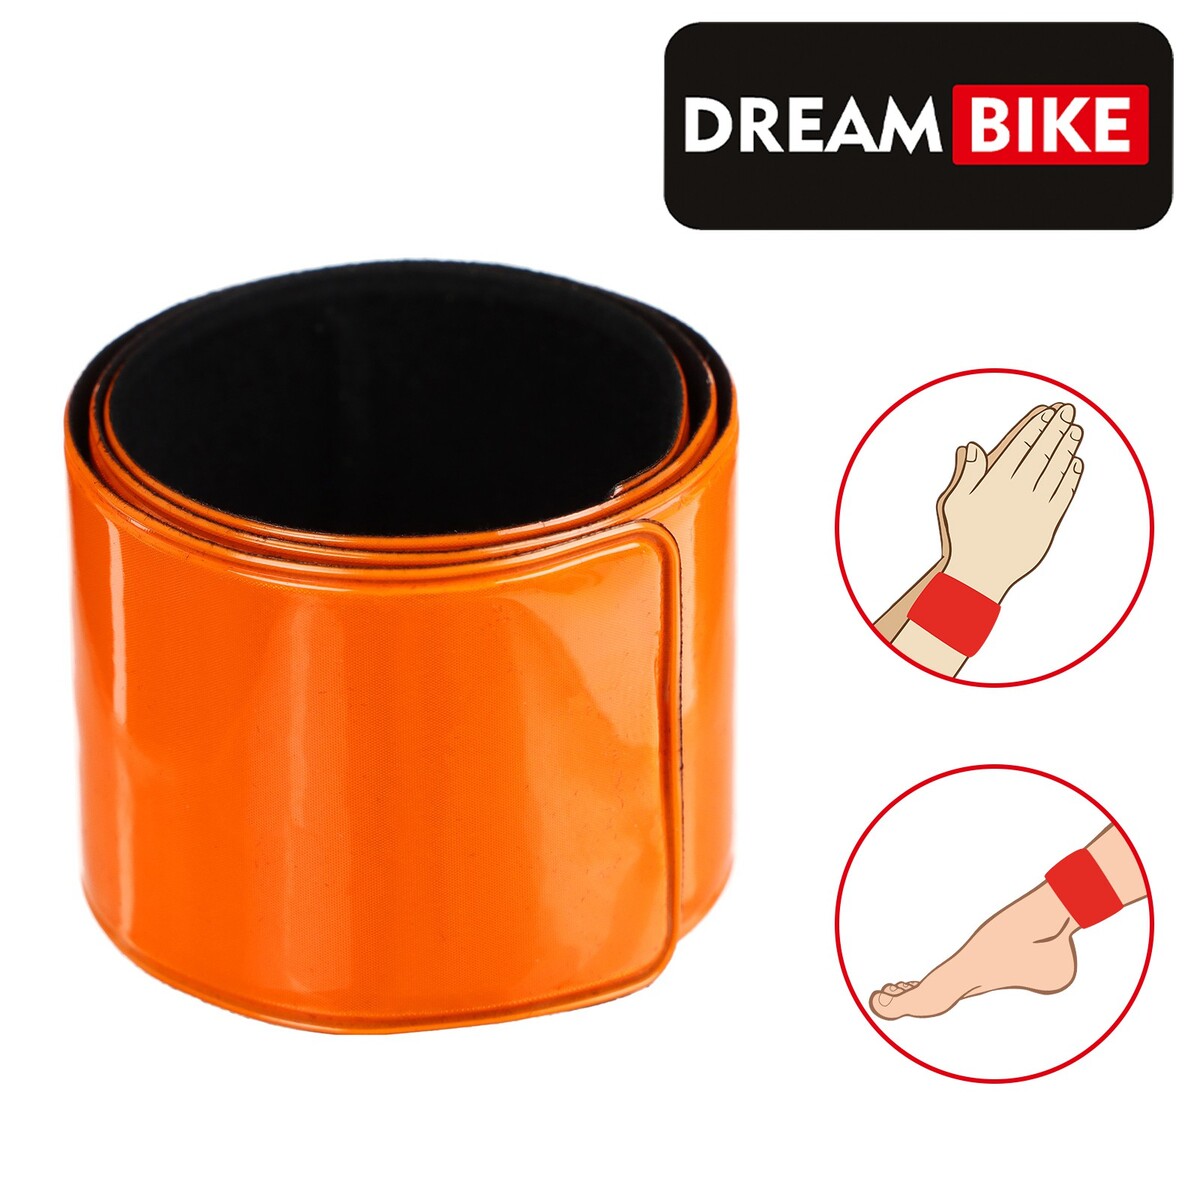 Лента dream bike светоотражающая, 30х340мм, на ногу/руку, самозатягивающаяся, цвет оранжевый, Dream Bike